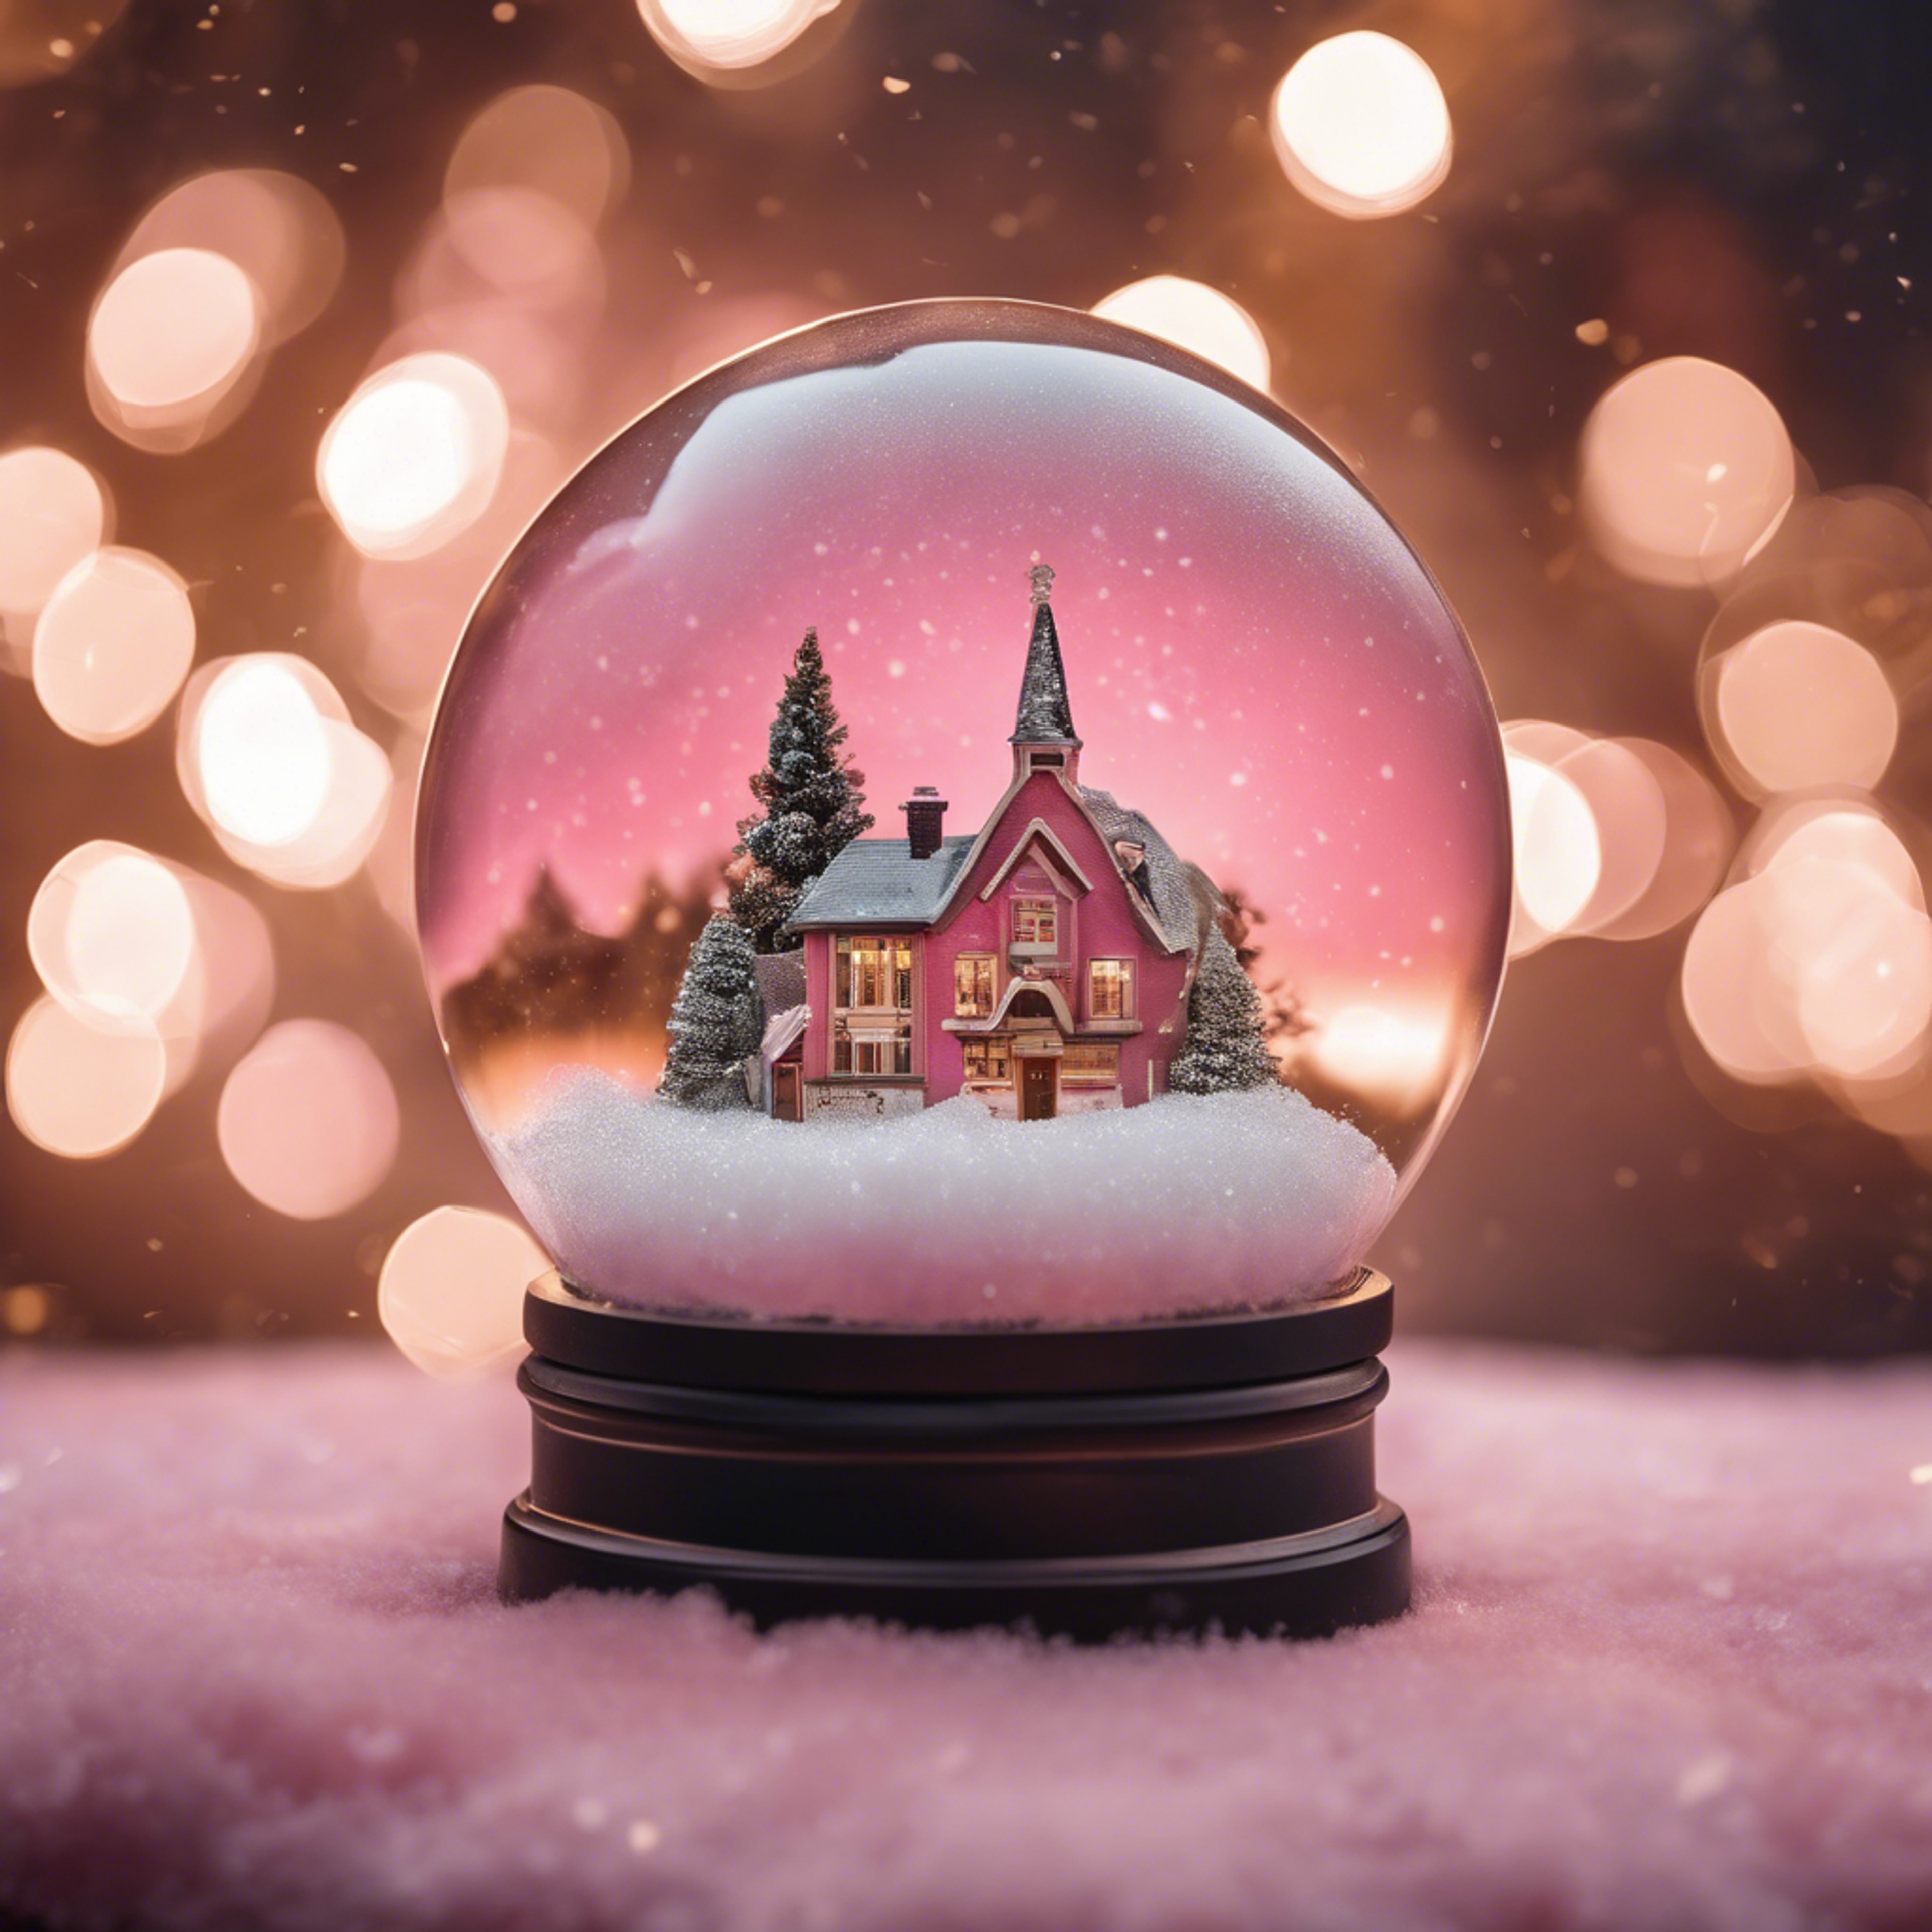 An enchanting snow globe revealing a quaint town under a pink Christmas sky. Papel de parede[a24ac541fe61415897f7]